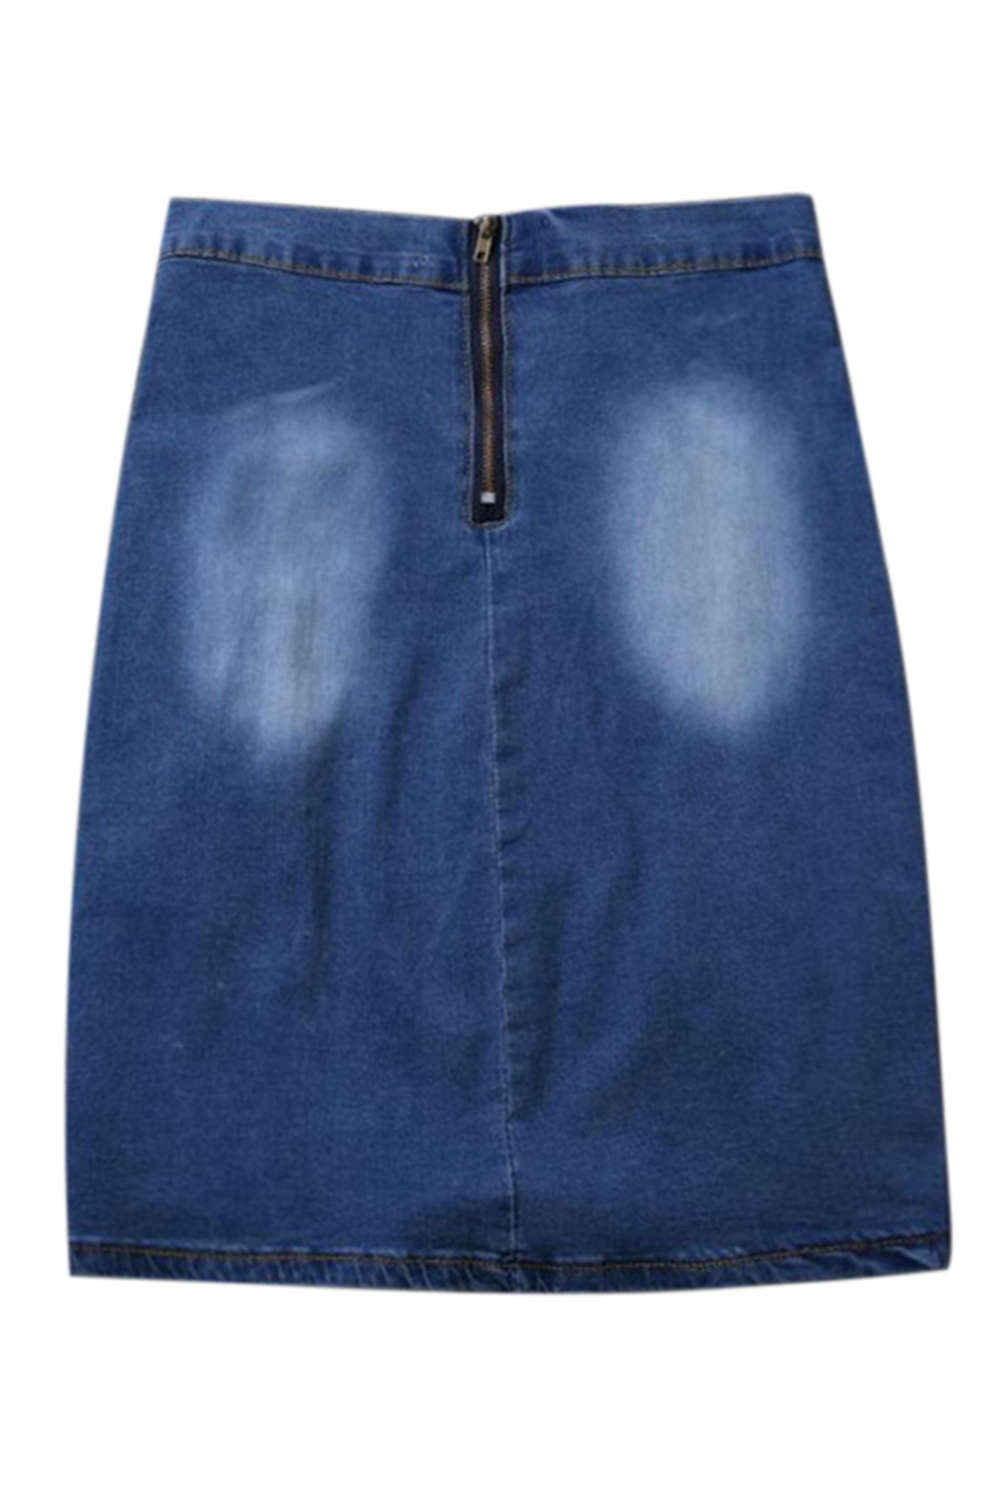 Iyasson Women High Waisted Denim Skirt with Rips